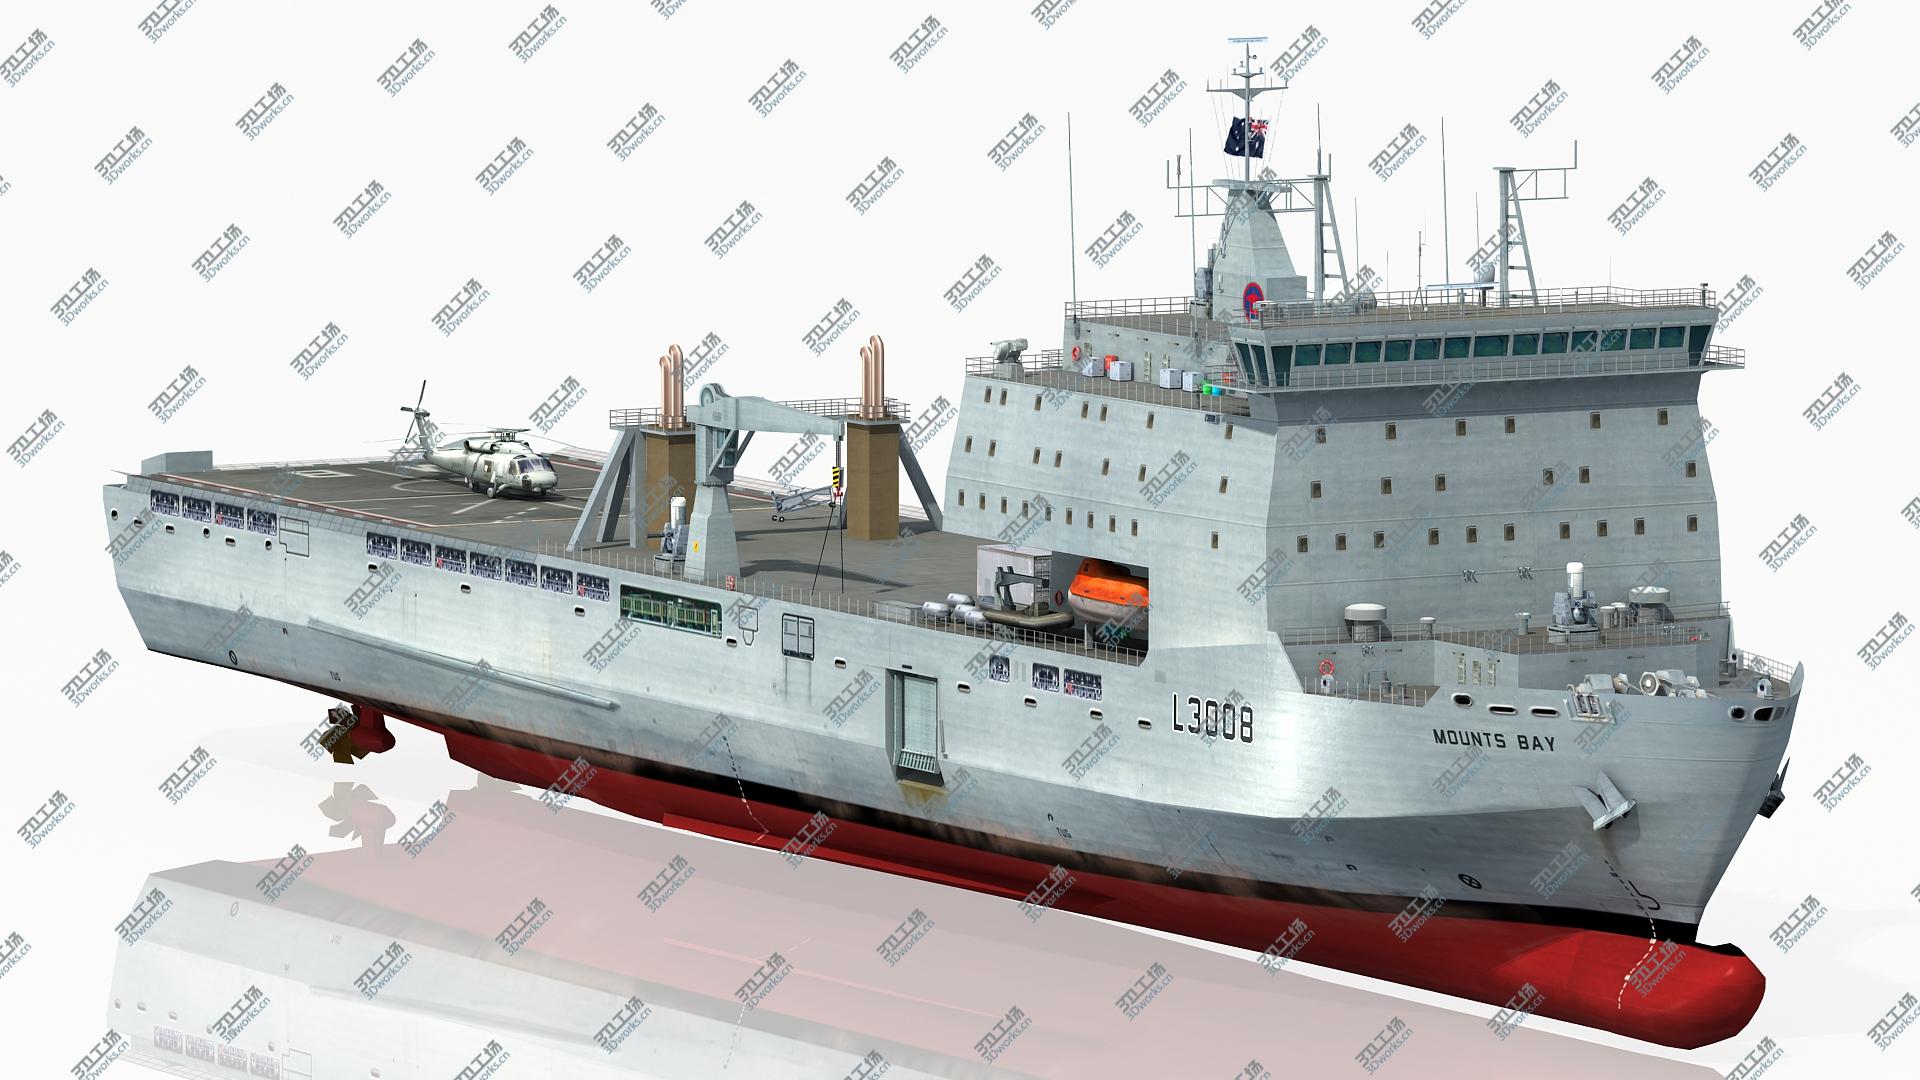 images/goods_img/2021040233/HMAS Mounts Bay L3008 3D model/1.jpg